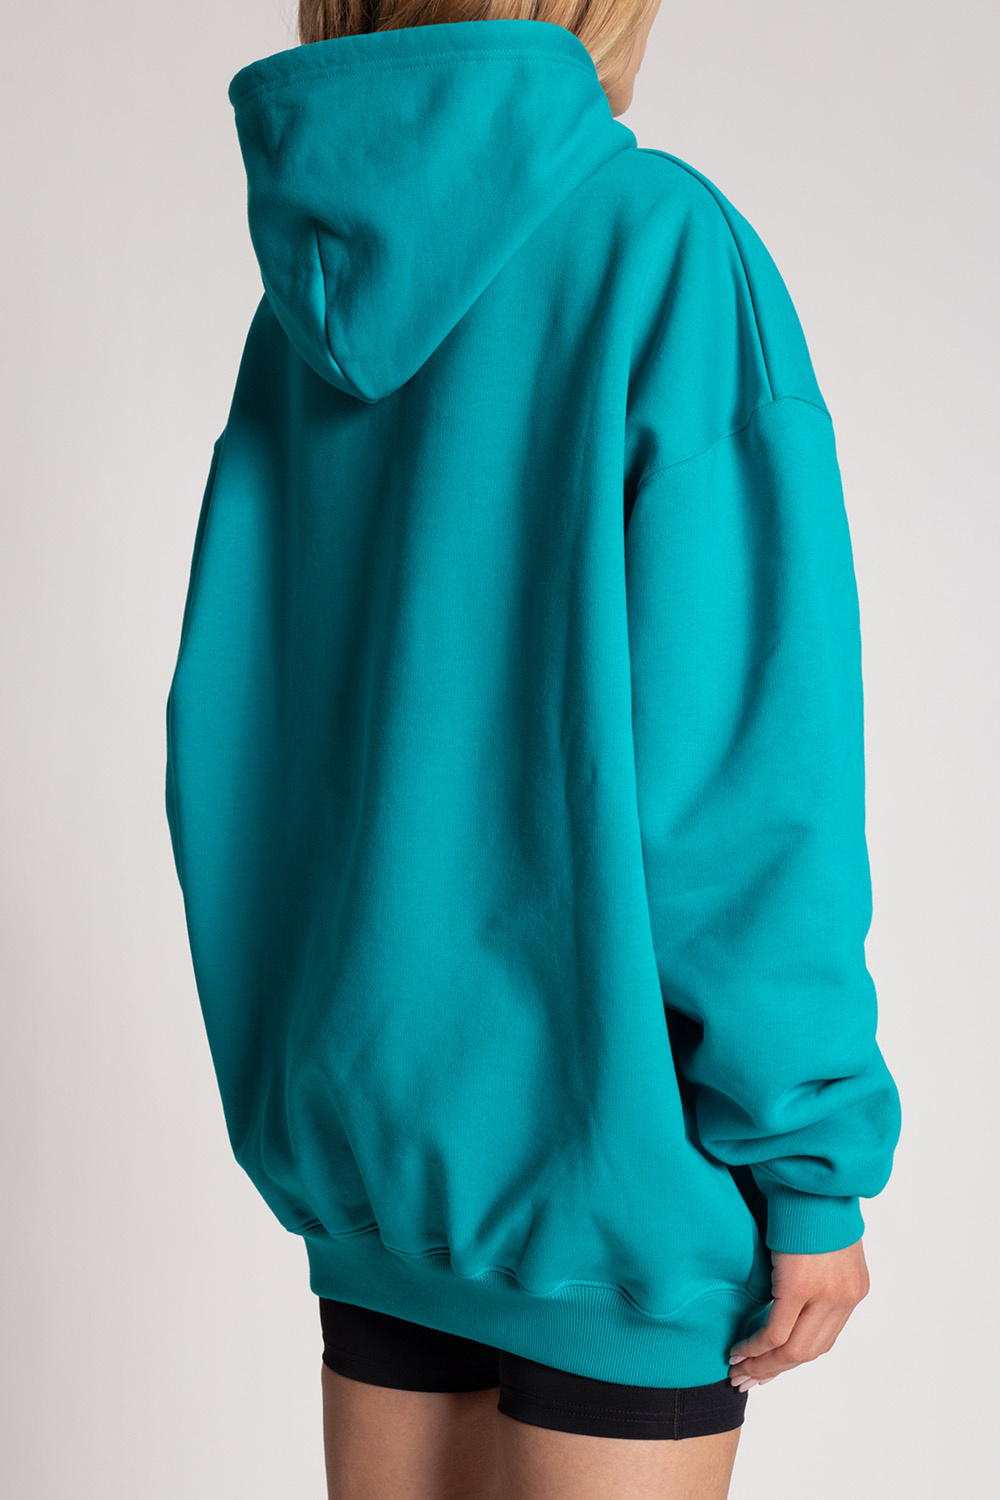 Balenciaga Oversize hoodie with logo | Women's Clothing | Vitkac